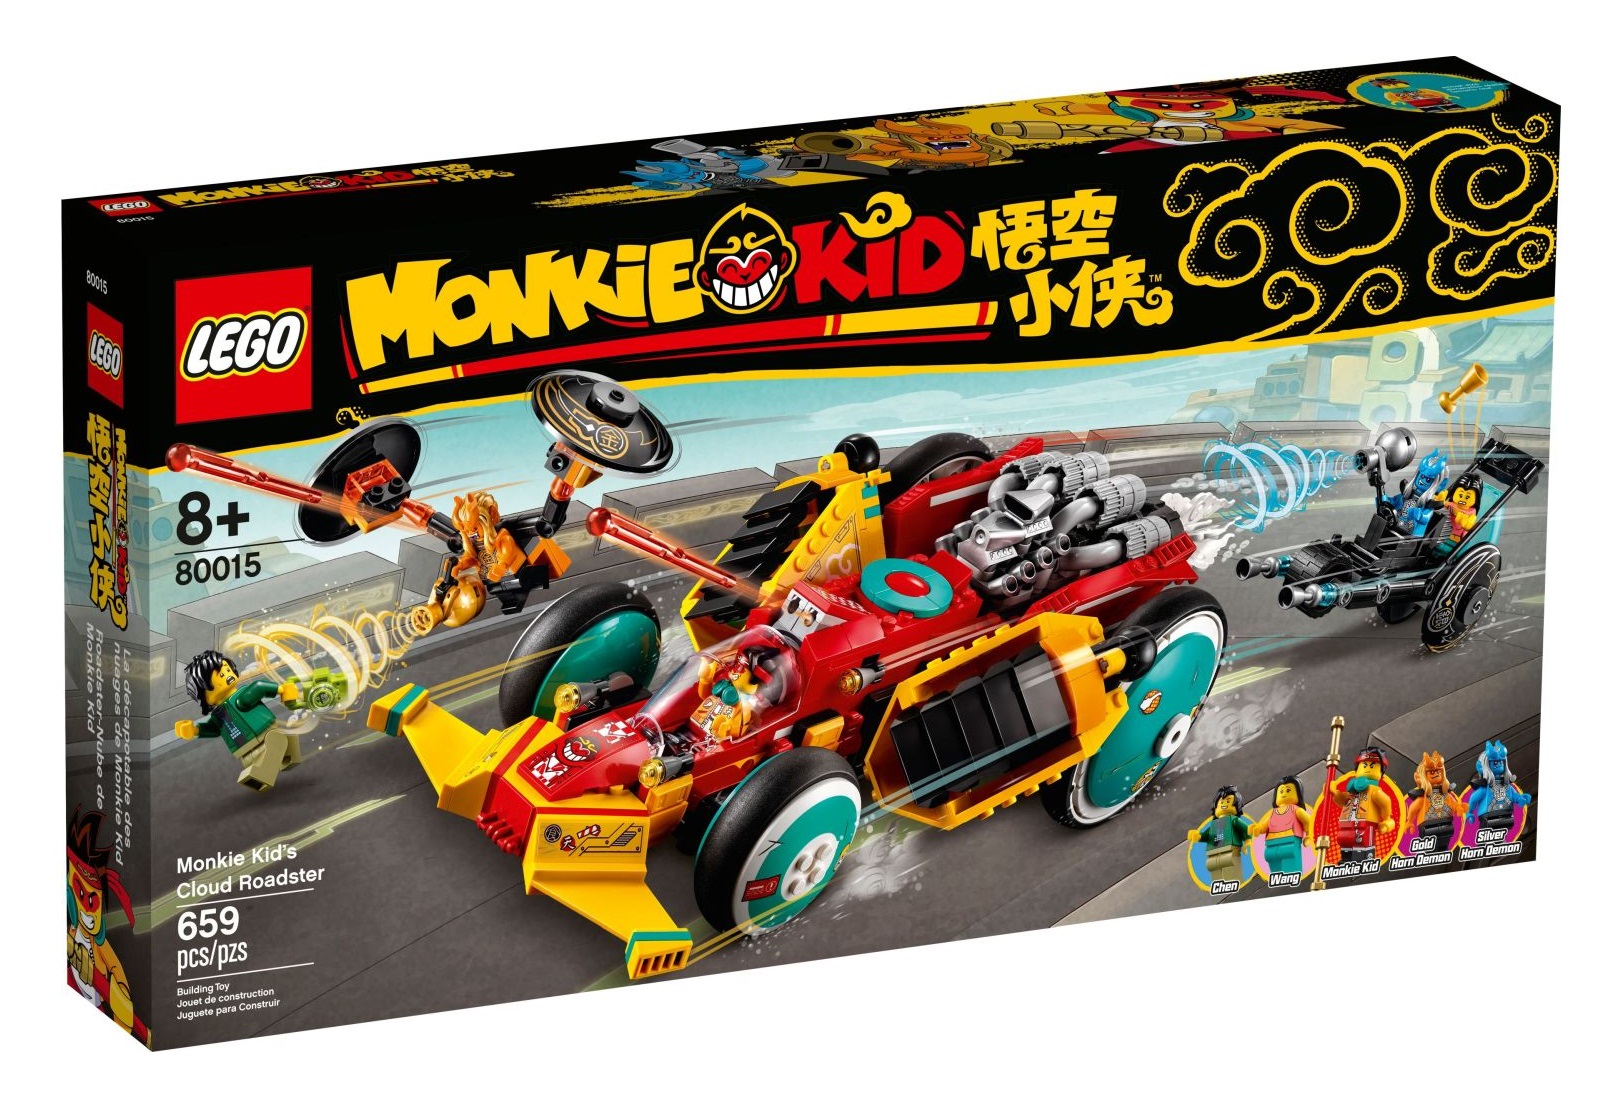 New lego Chen from set 80015 monkie kid mk023